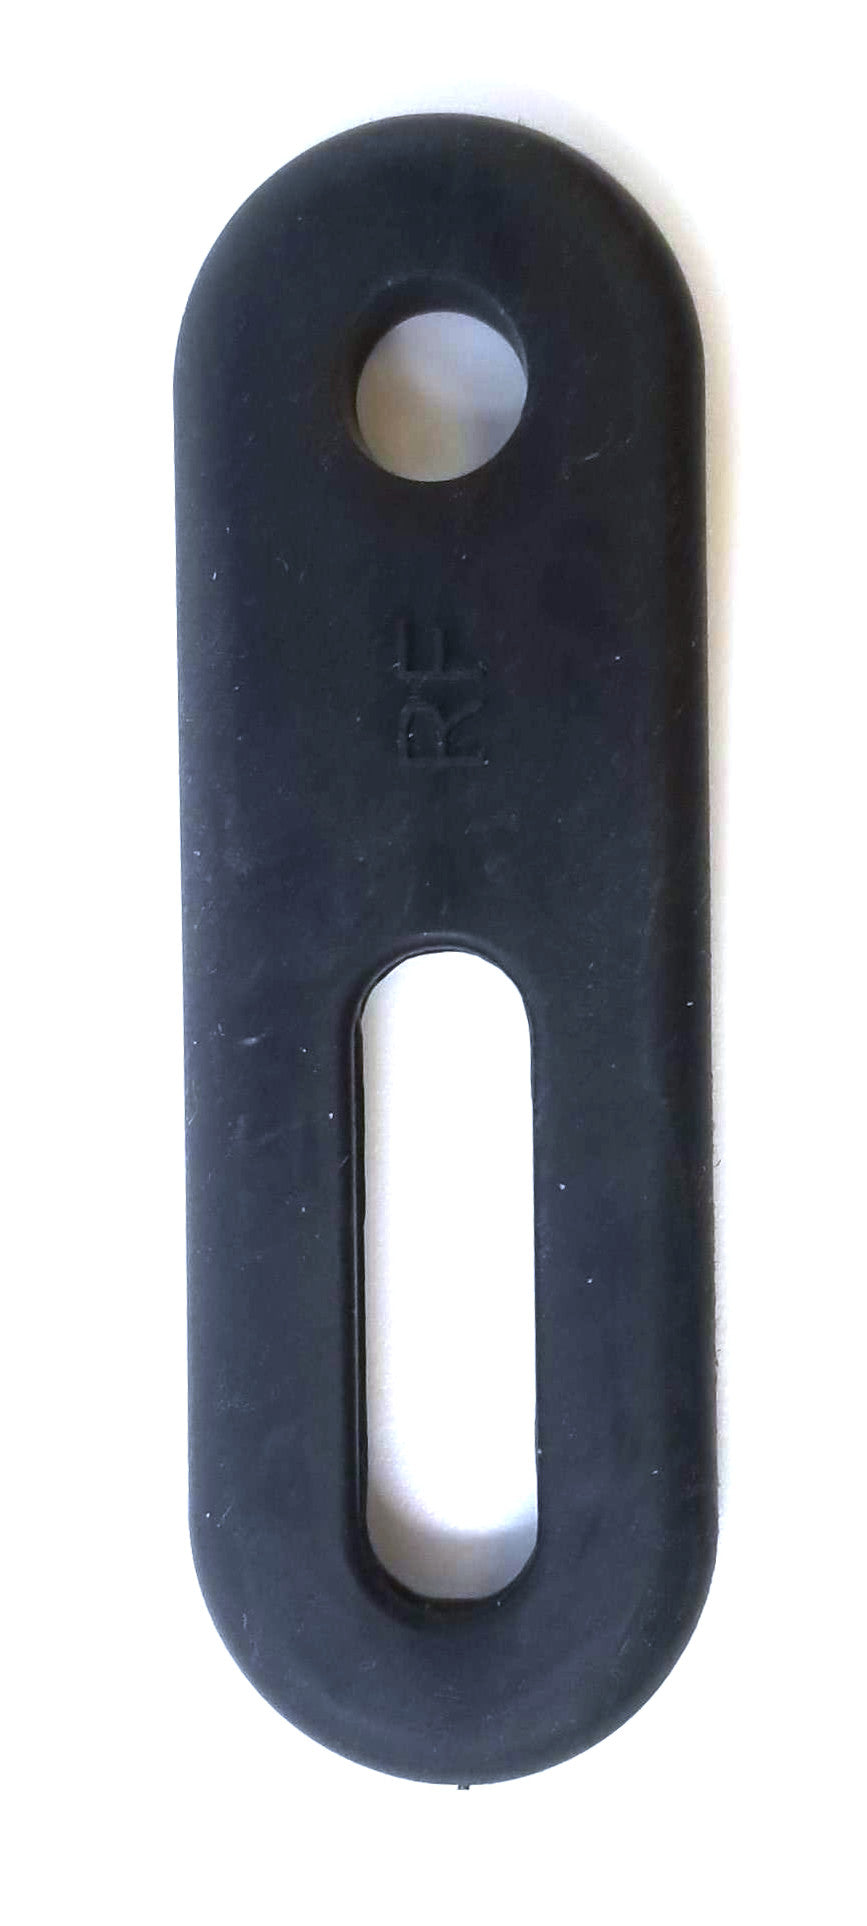 Aftermarket Rubber Door Strap Body Latch Kit for Yamaha UTV 5B4-F2929-00-00 / 94053-115-000